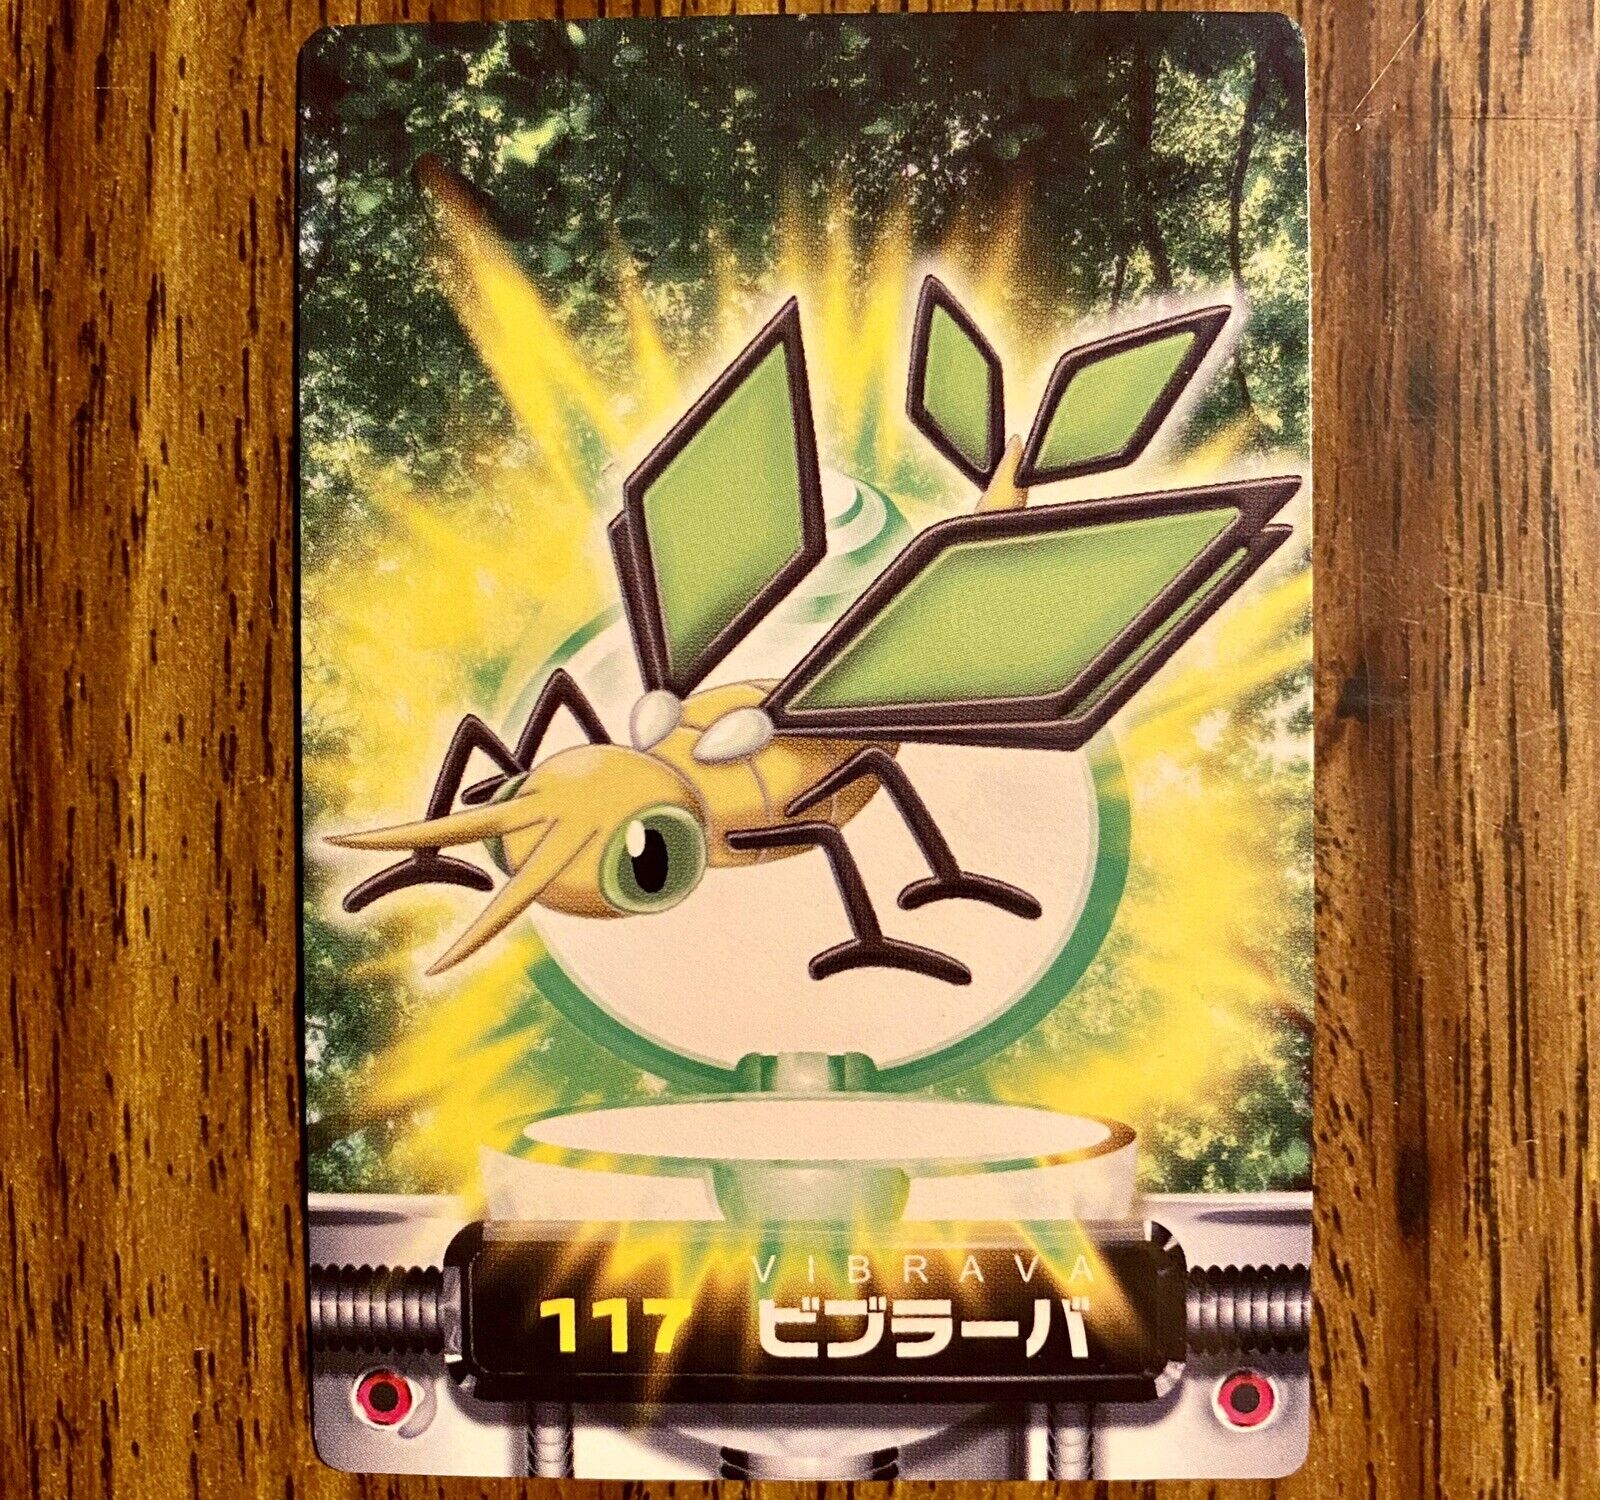 Vibrava Carddass Zukan Bandai Pokémon Card #117